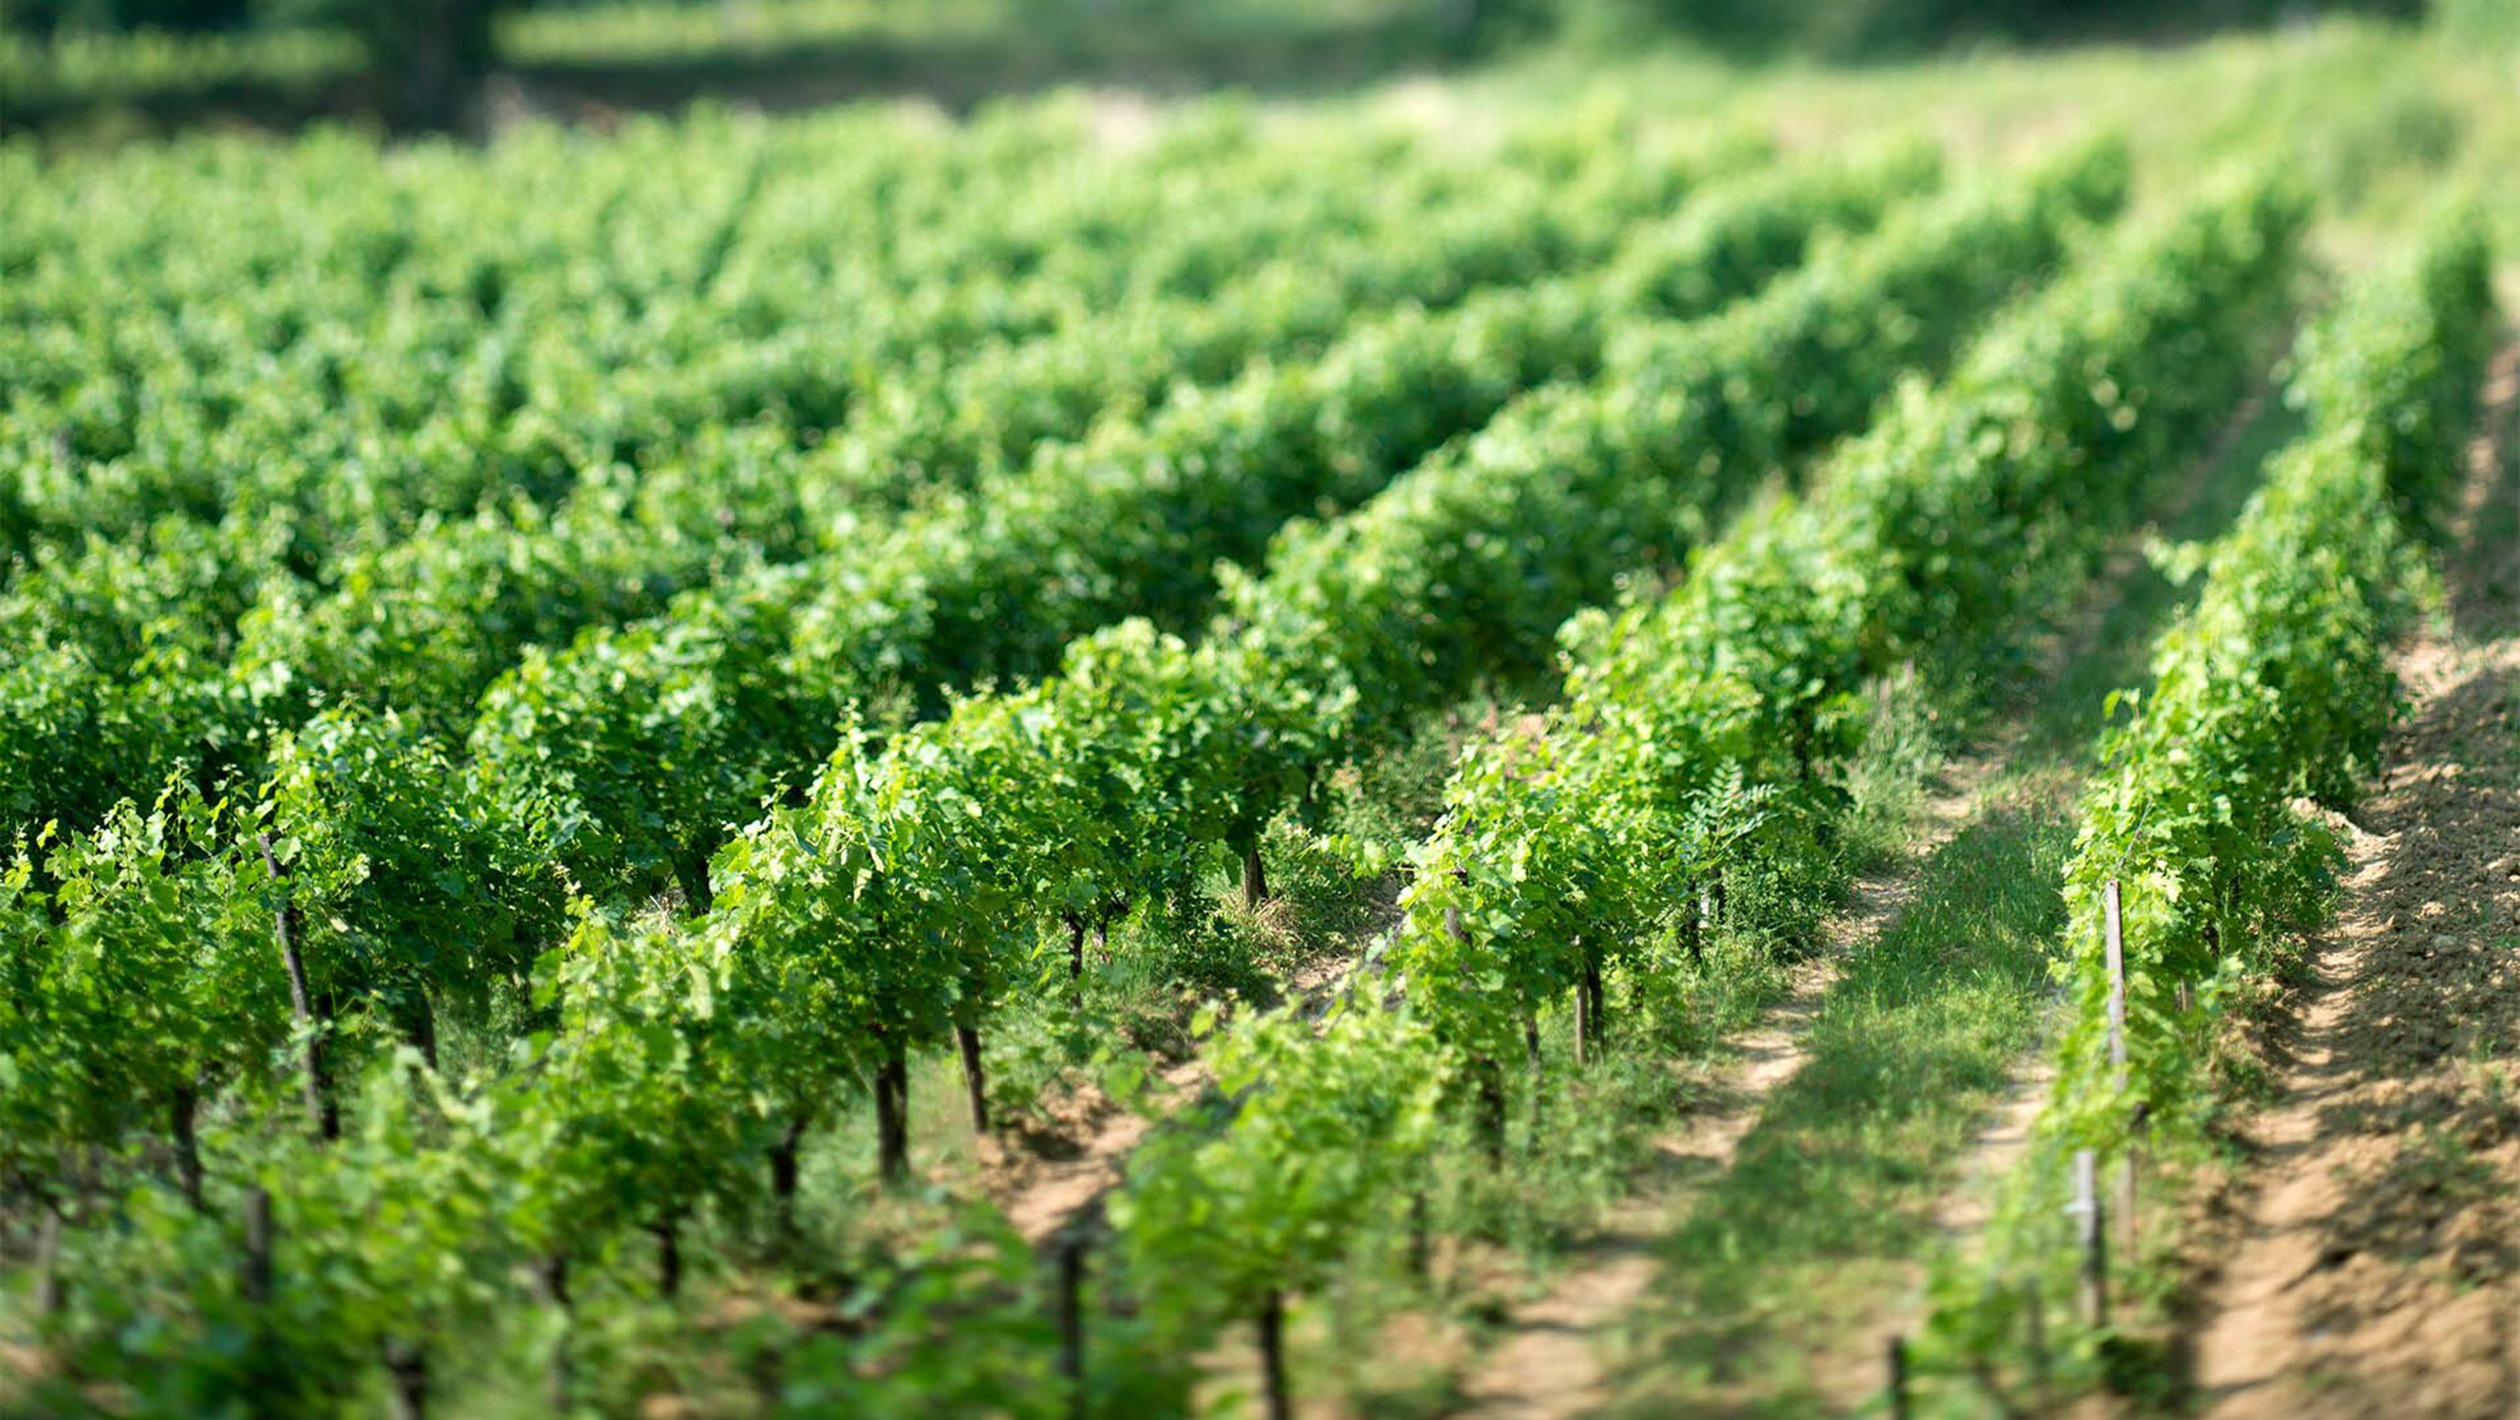 A lush and uniform vineyard